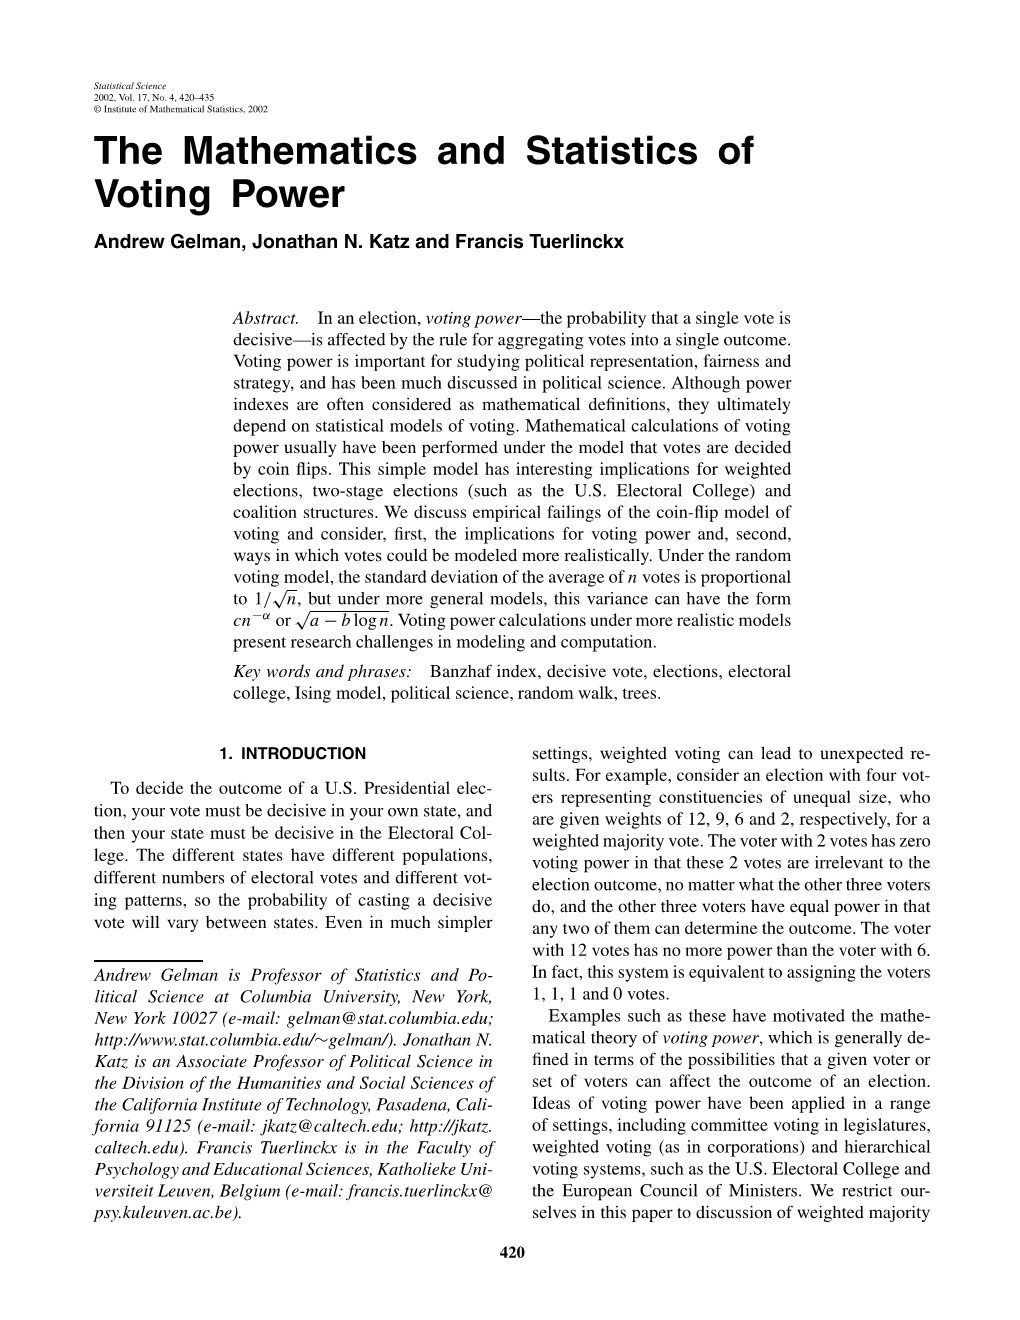 The Mathematics and Statistics of Voting Power Andrew Gelman, Jonathan N